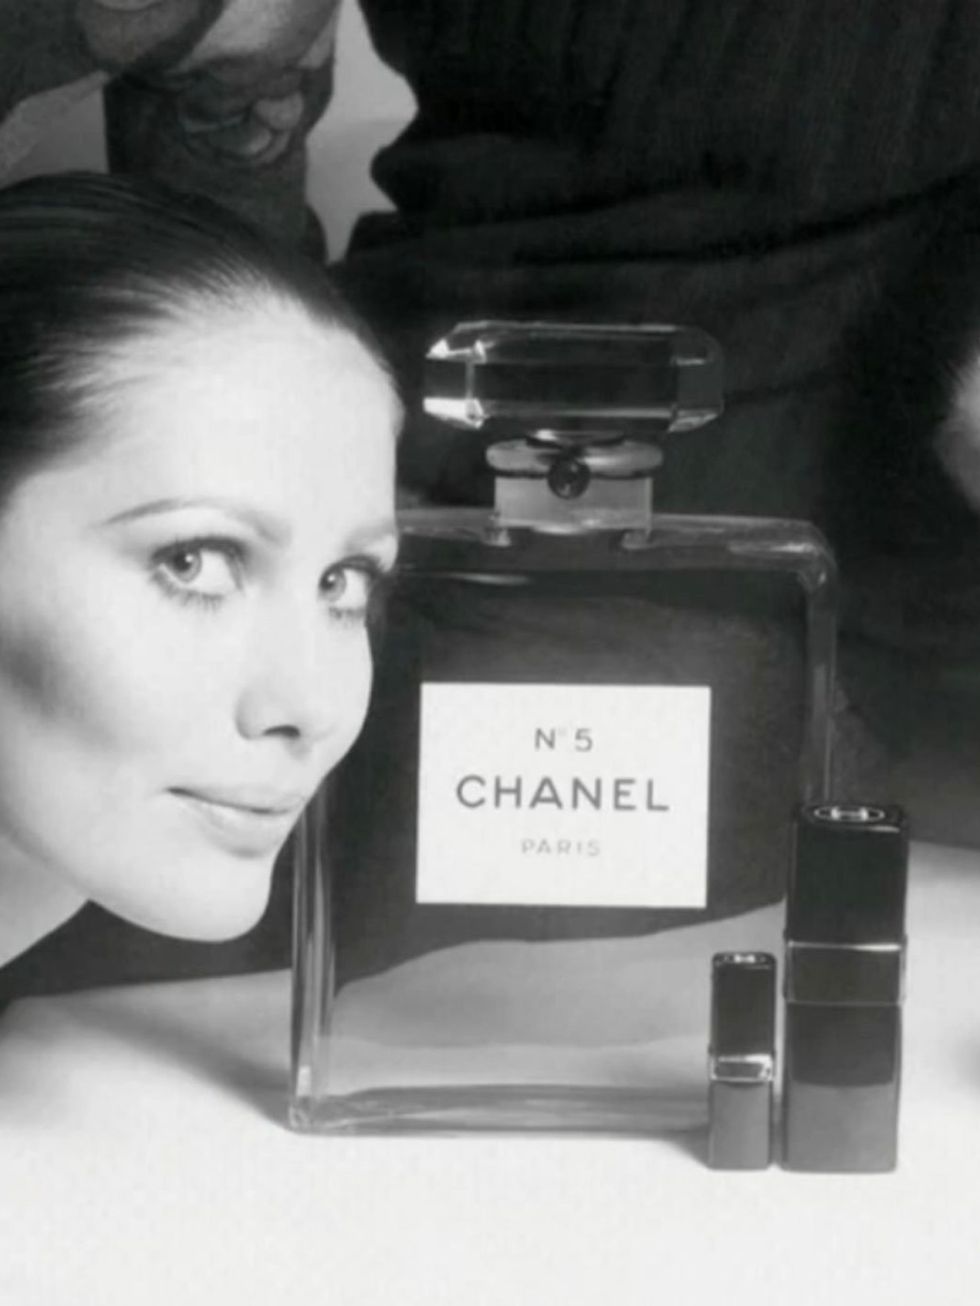 Weekend Perfume Movies: Chanel No 5 ~ Perfume Ads